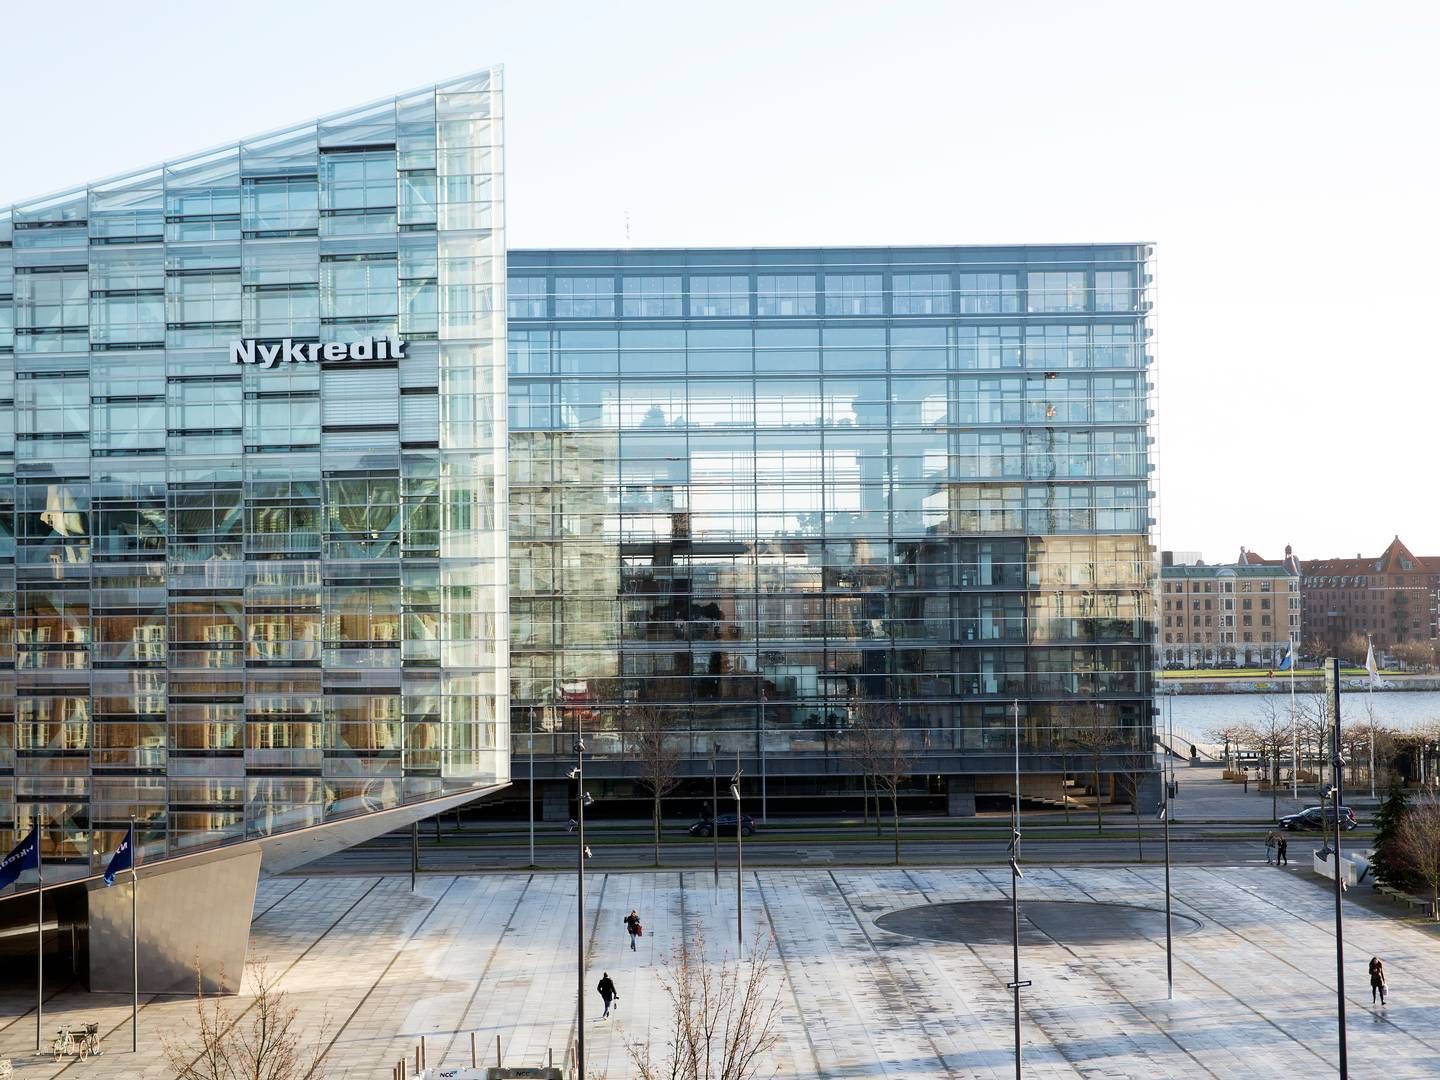 The Nykredit headquarters in Copenhagen. | Foto: Thomas Borberg